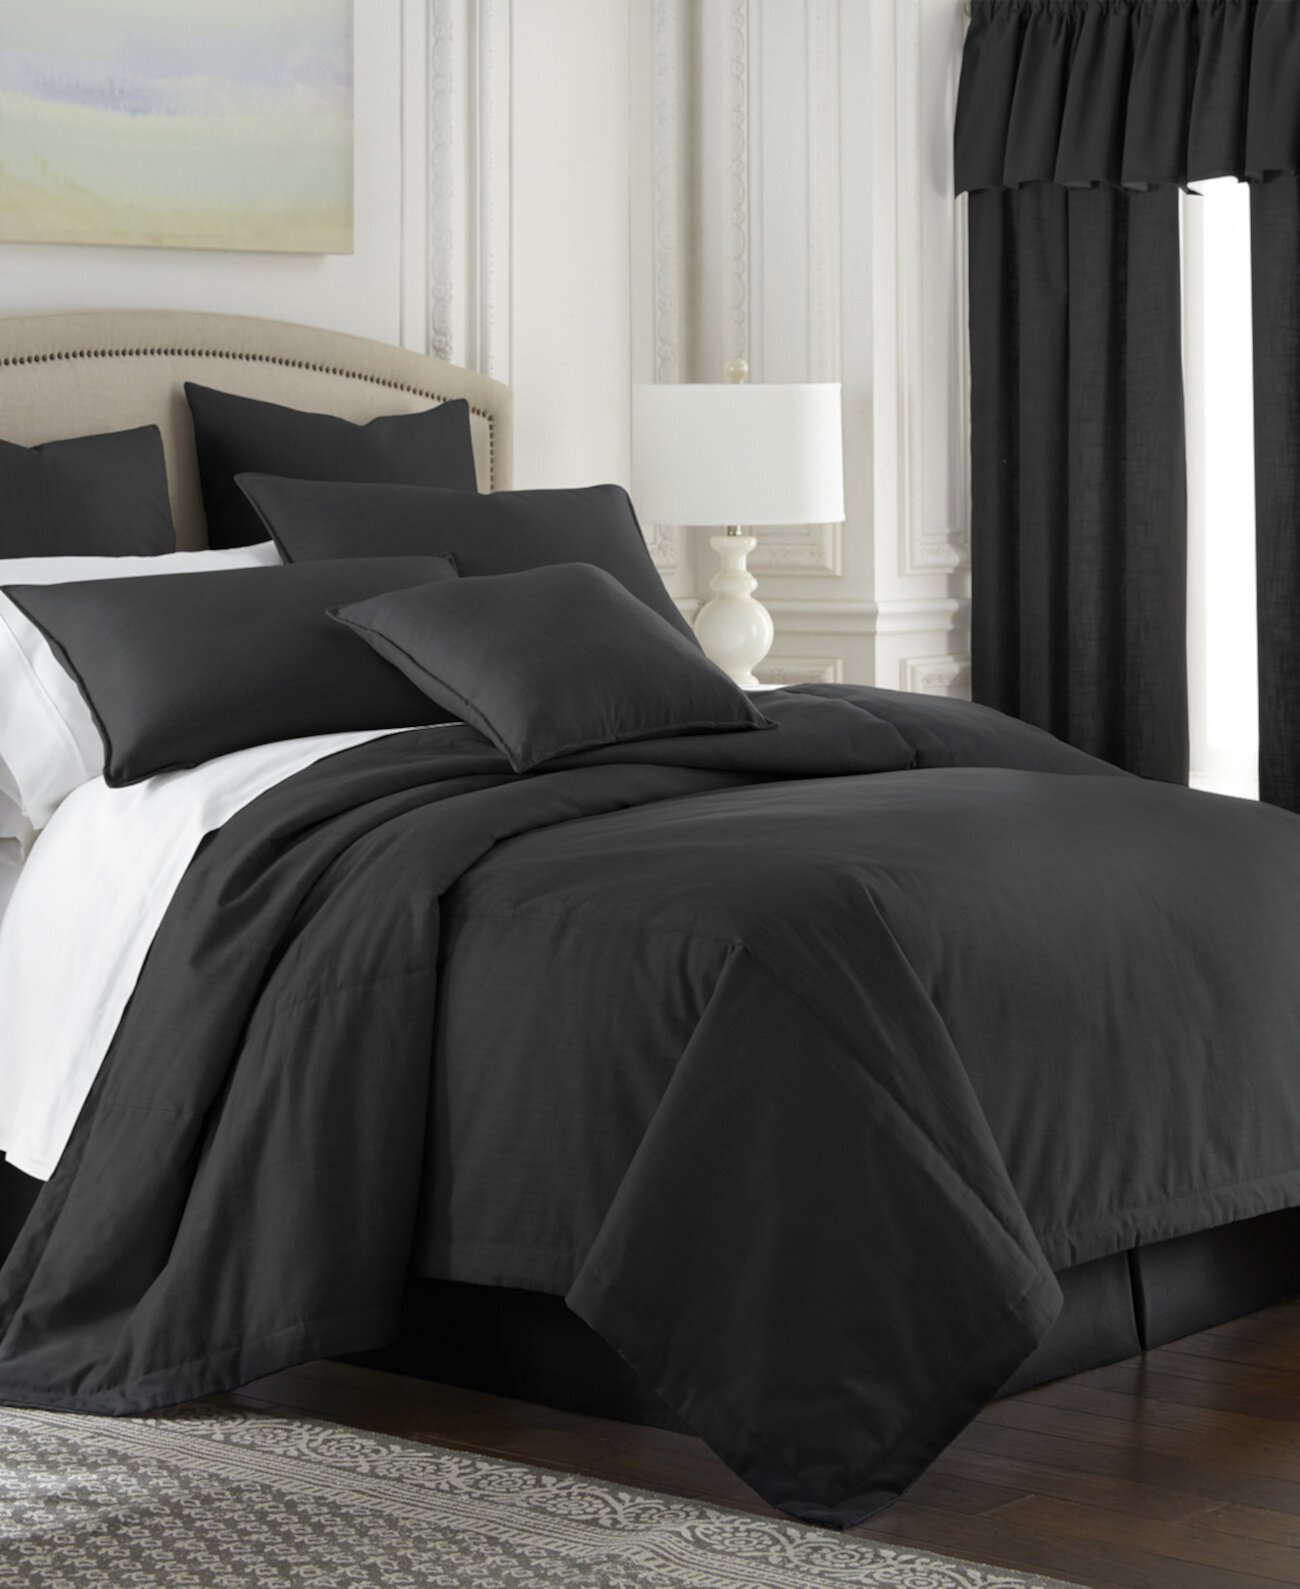 Cambric Black Comforter-King / Король Калифорнии Colcha Linens